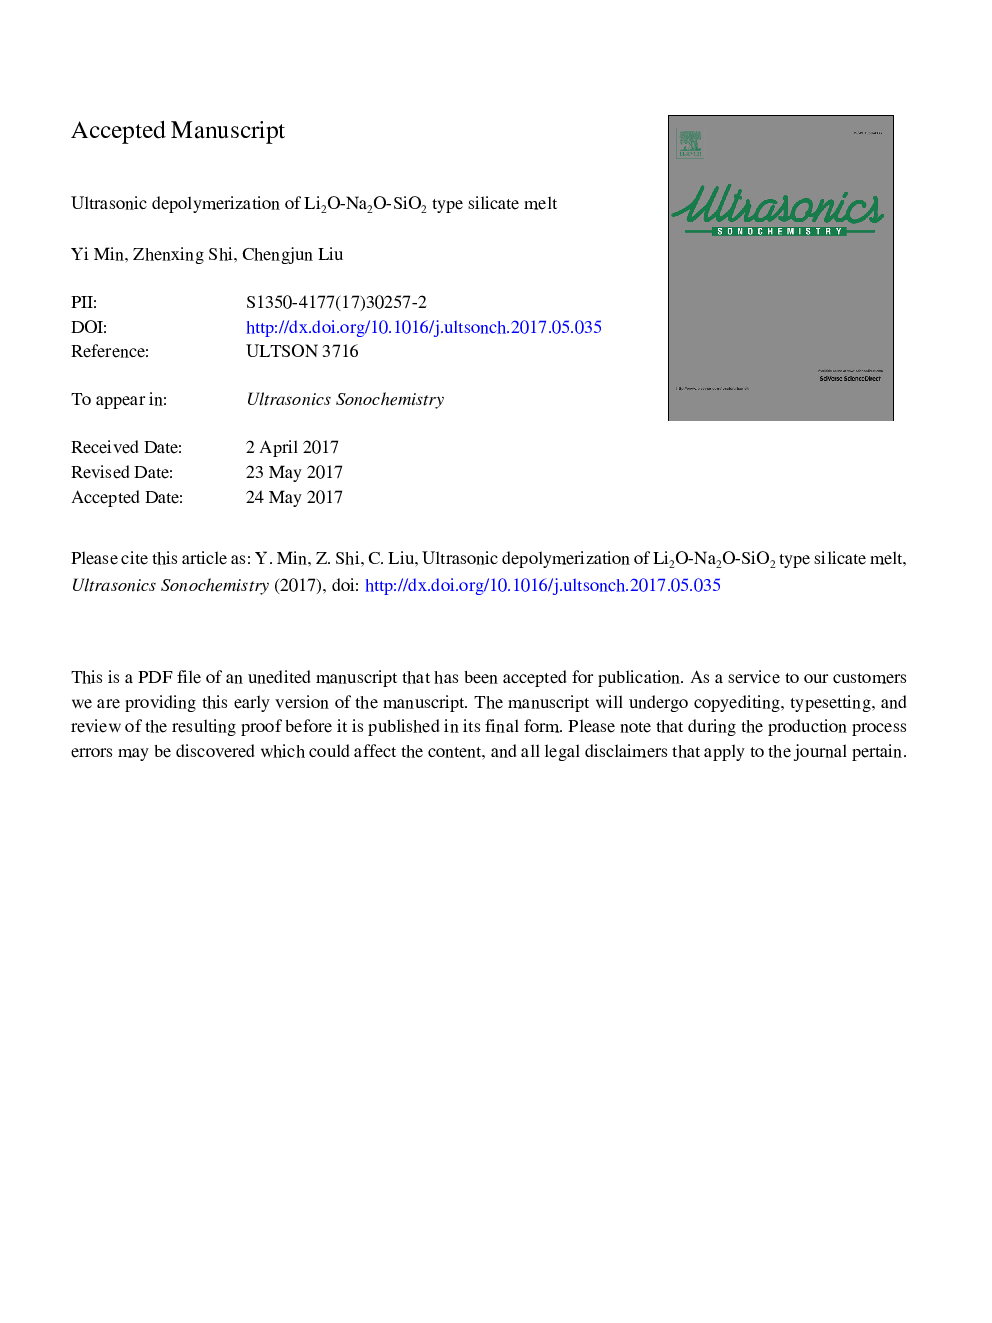 Ultrasonic depolymerization of Li2O-Na2O-SiO2 type silicate melt